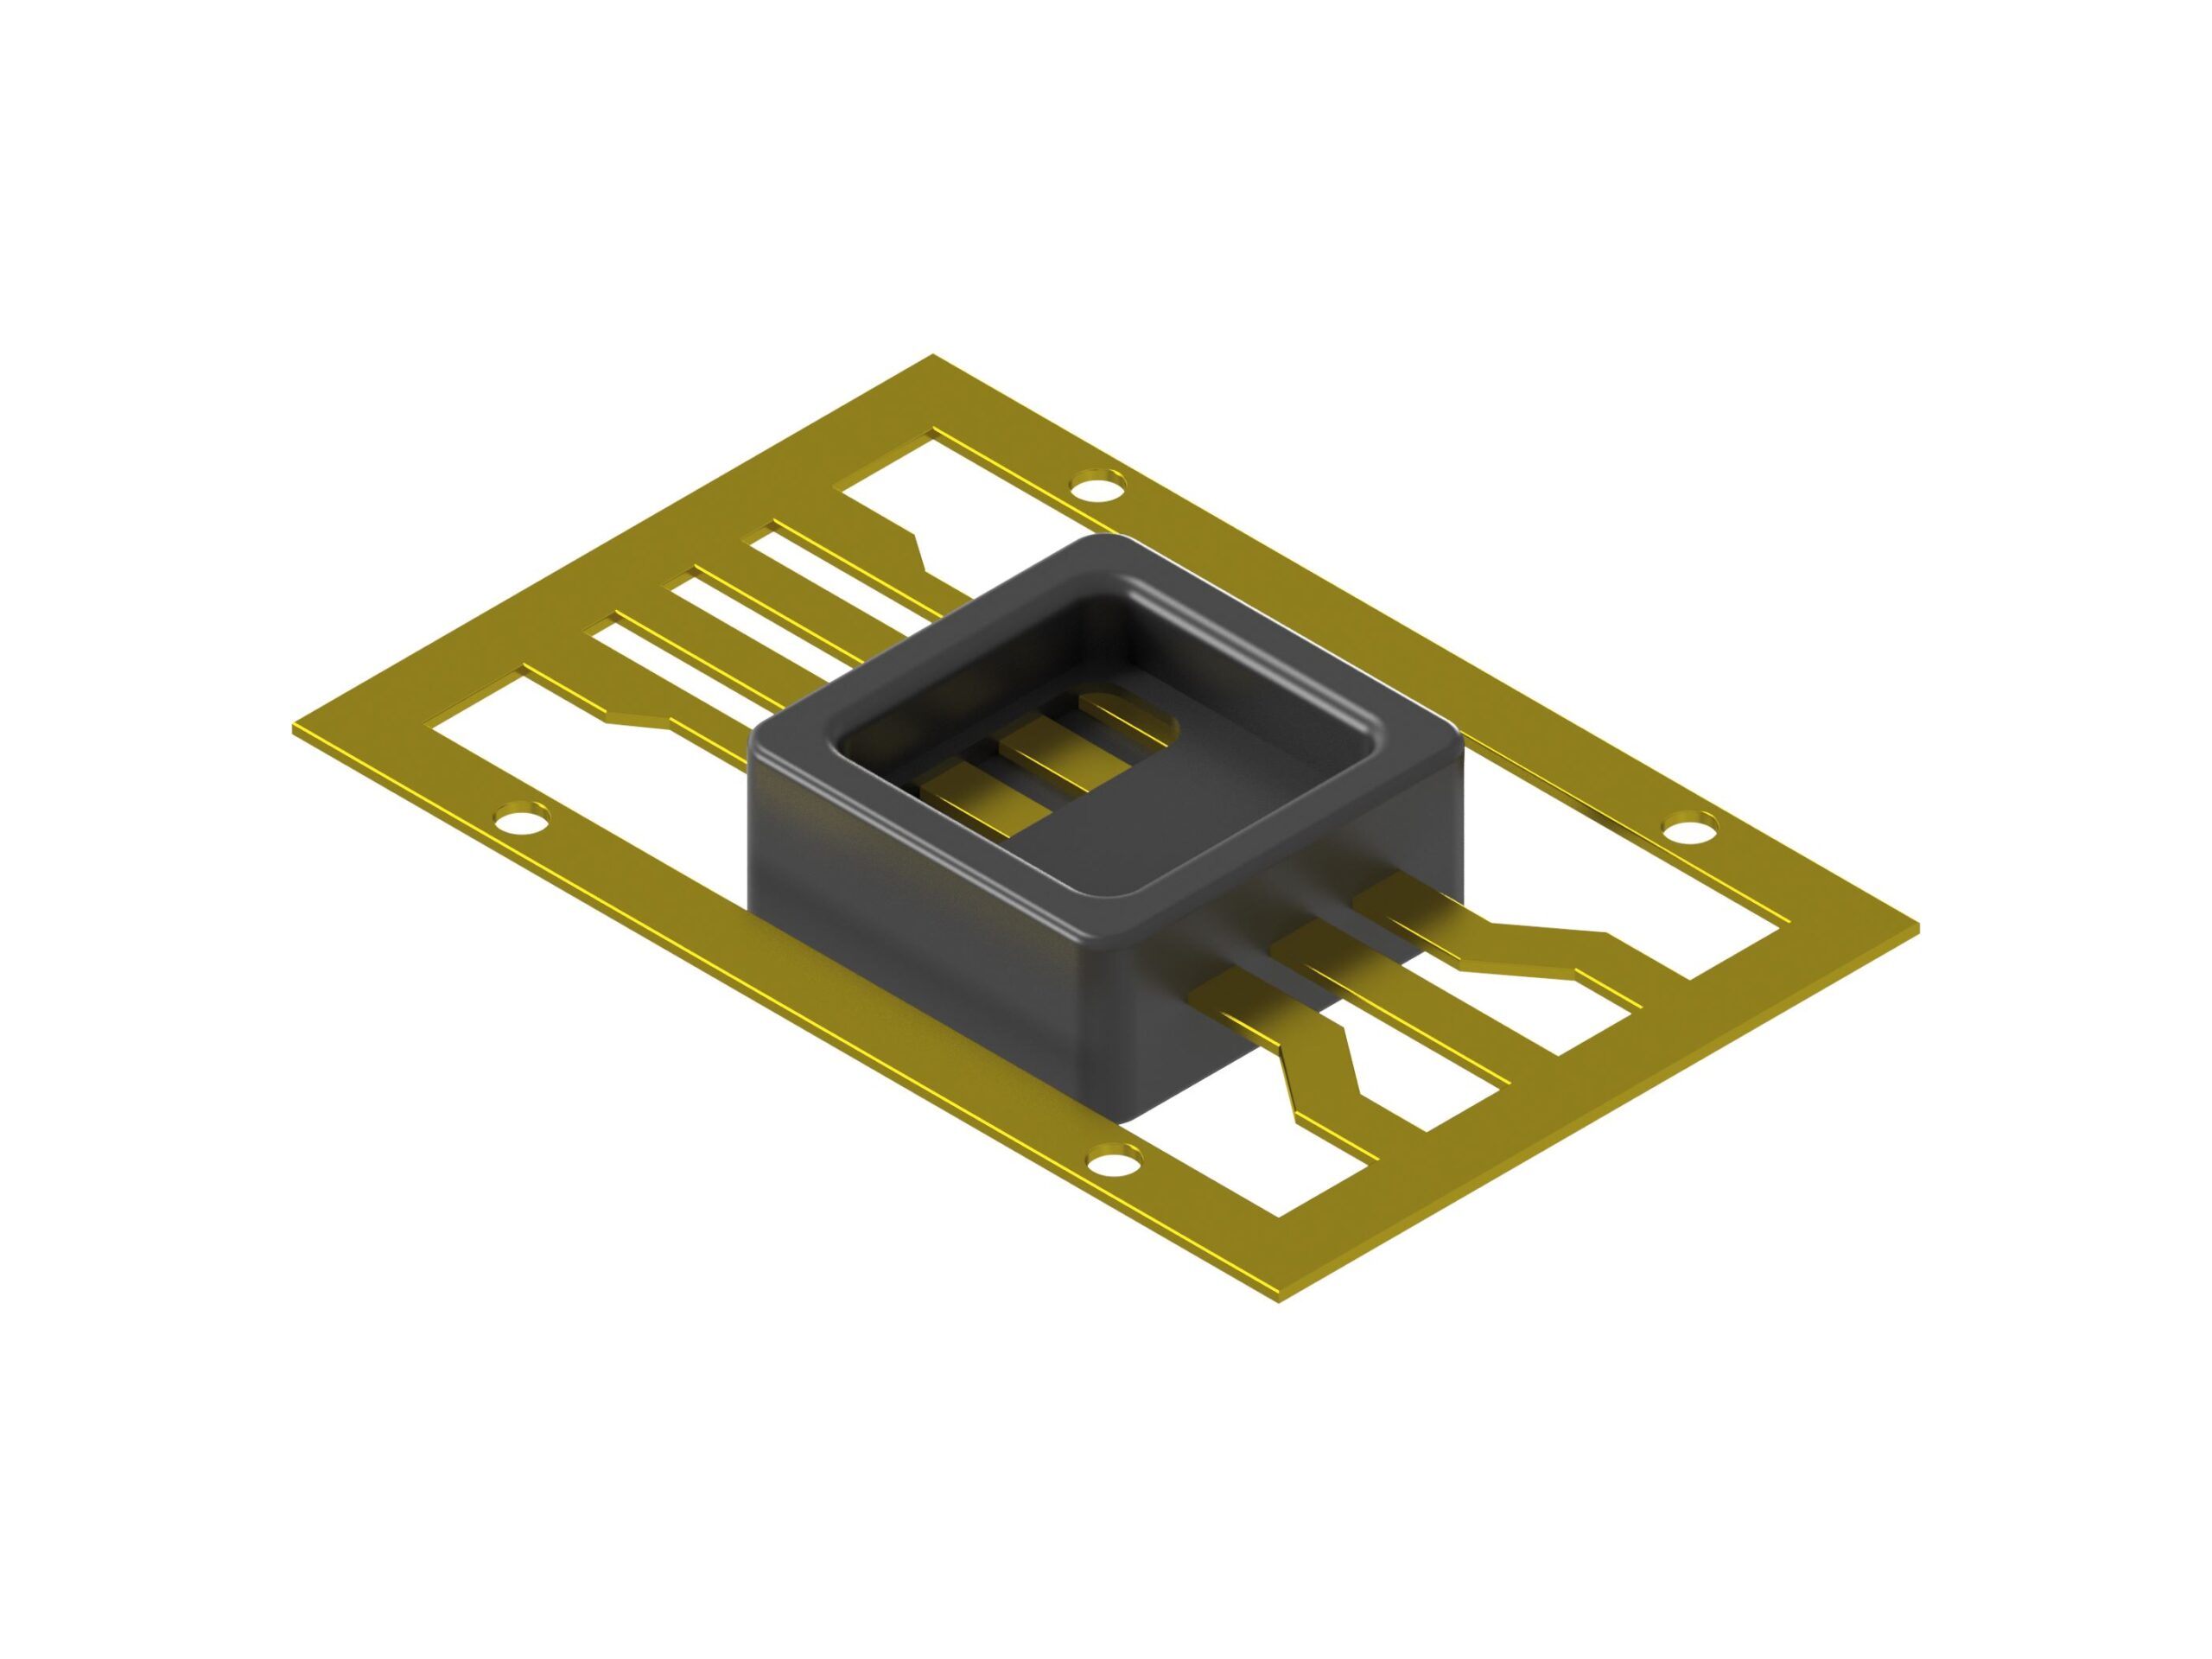 Sensor cases (Press & surface treatment (plating) & insert molding)